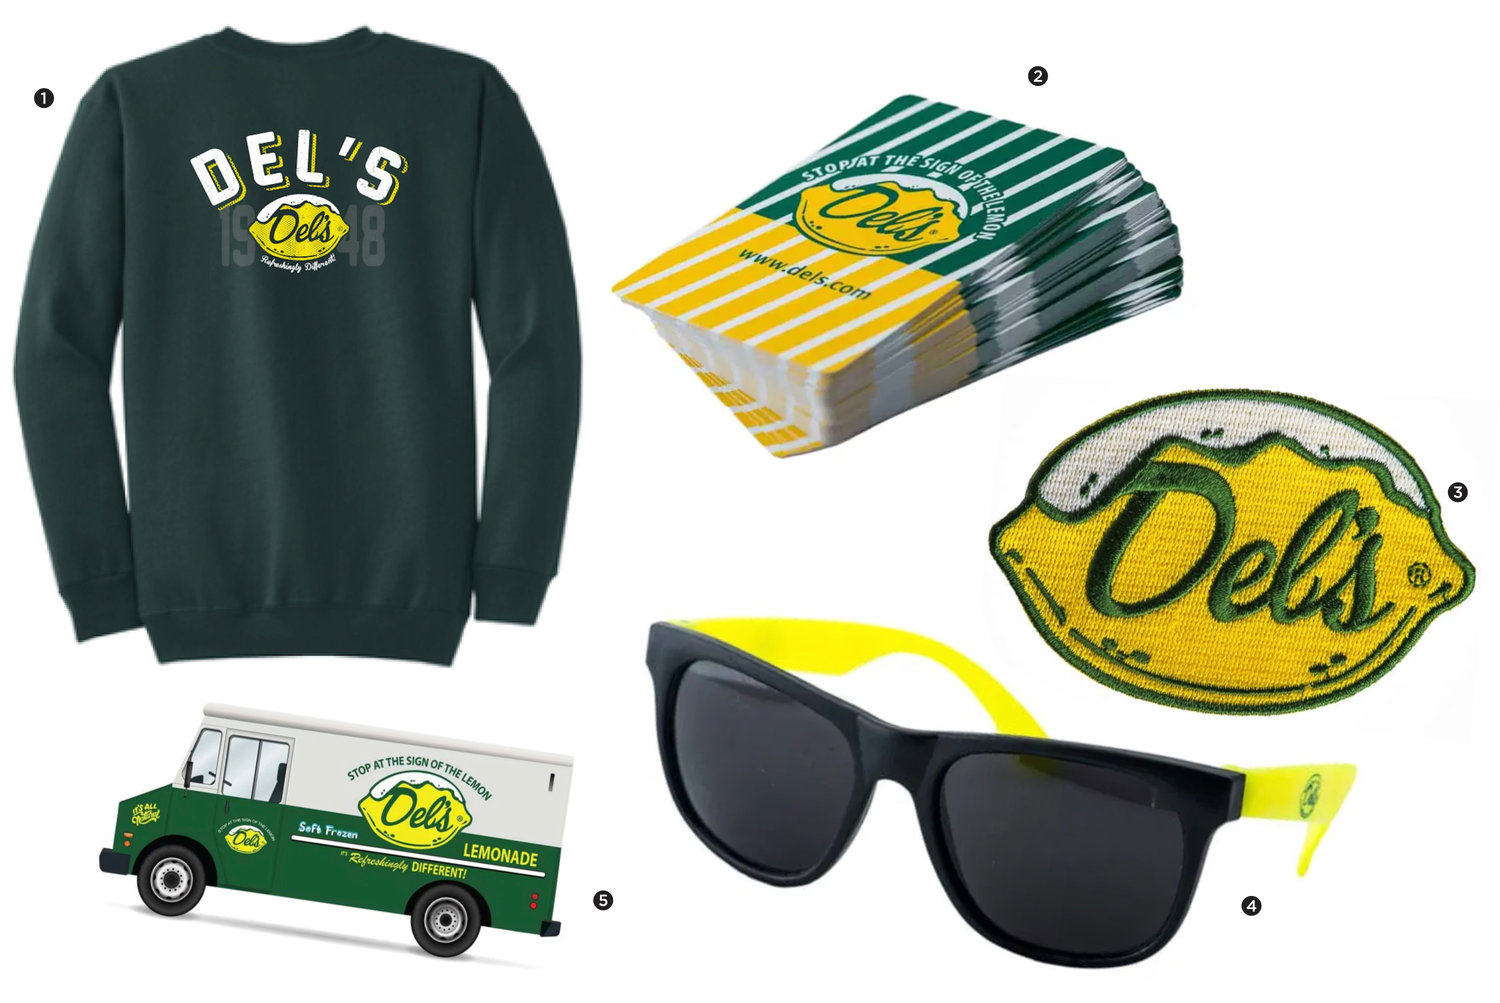 1. Del’s 1948 Sweatshirt; 2. Del’s Playing Cards; 3. Del’s Iron On Patch; 4. Del’s Sunglasses; 5. Del’s Lemonade Truck Sticker